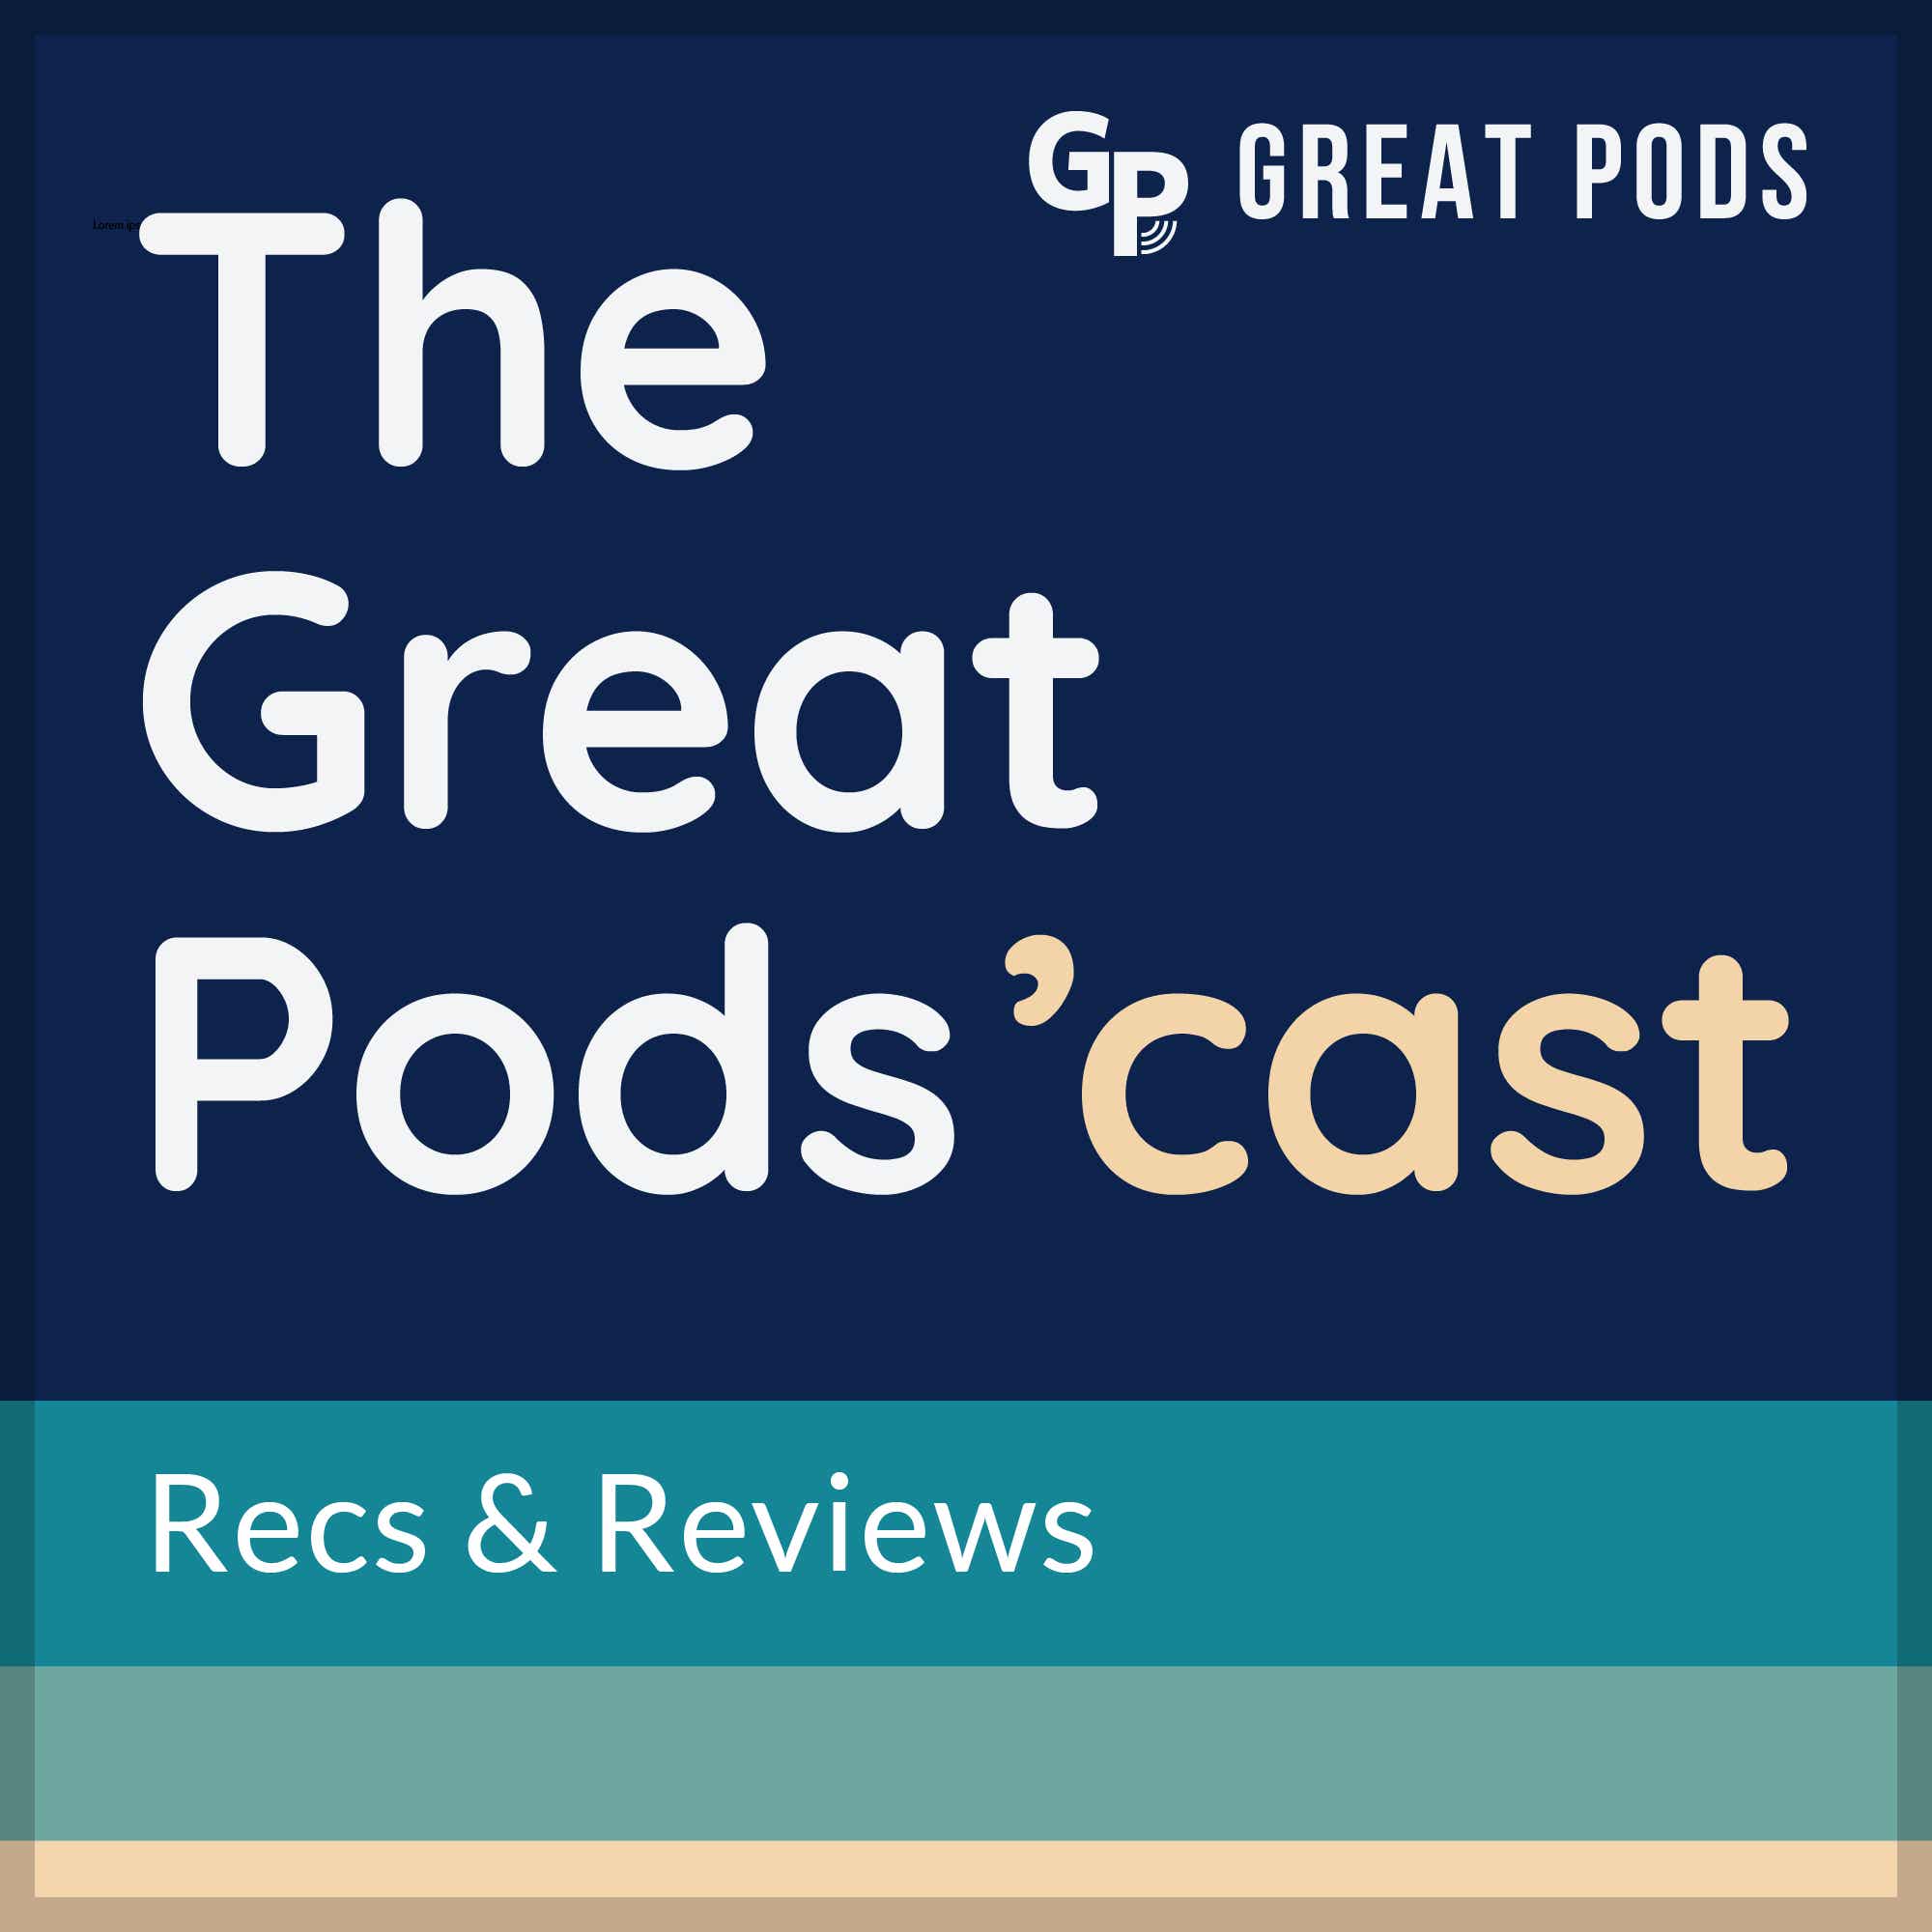 Great Pods 'cast Recs & Reviews podcast show image